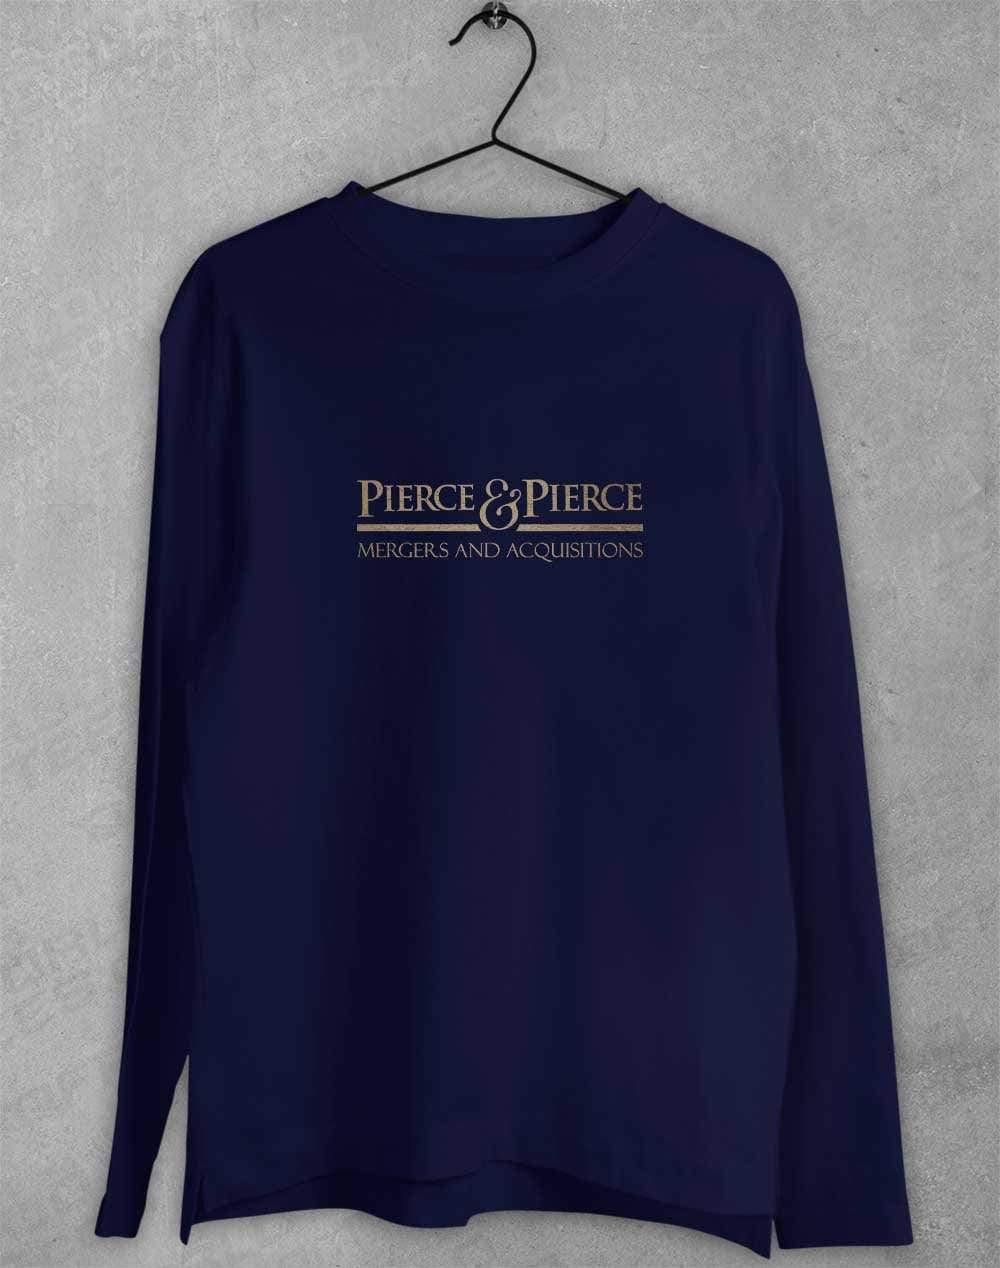 Pierce and Pierce Long Sleeve T-Shirt S / Navy  - Off World Tees